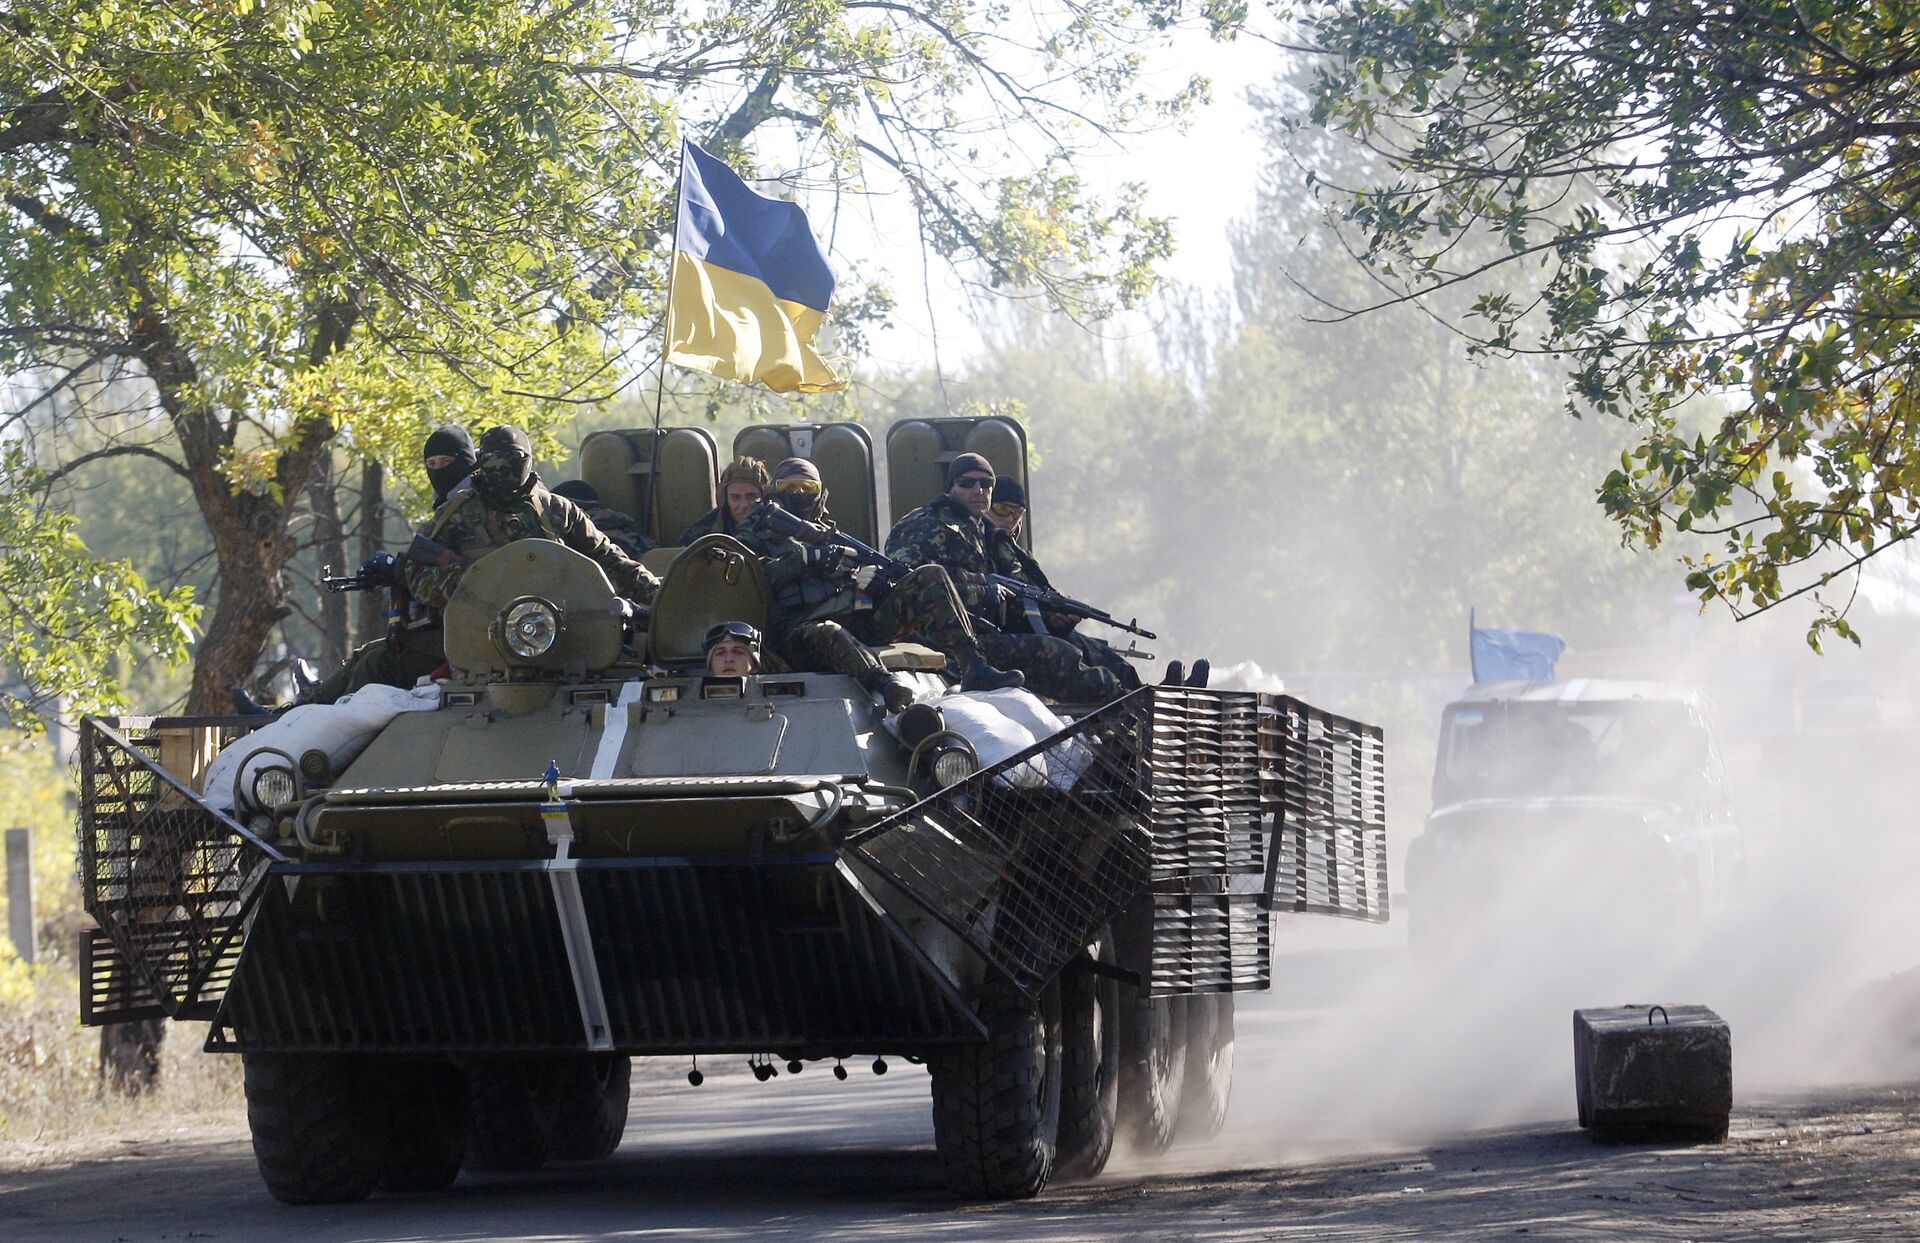 Ukrainian troops patrol in armored vehicles (File) - Sputnik International, 1920, 06.02.2022